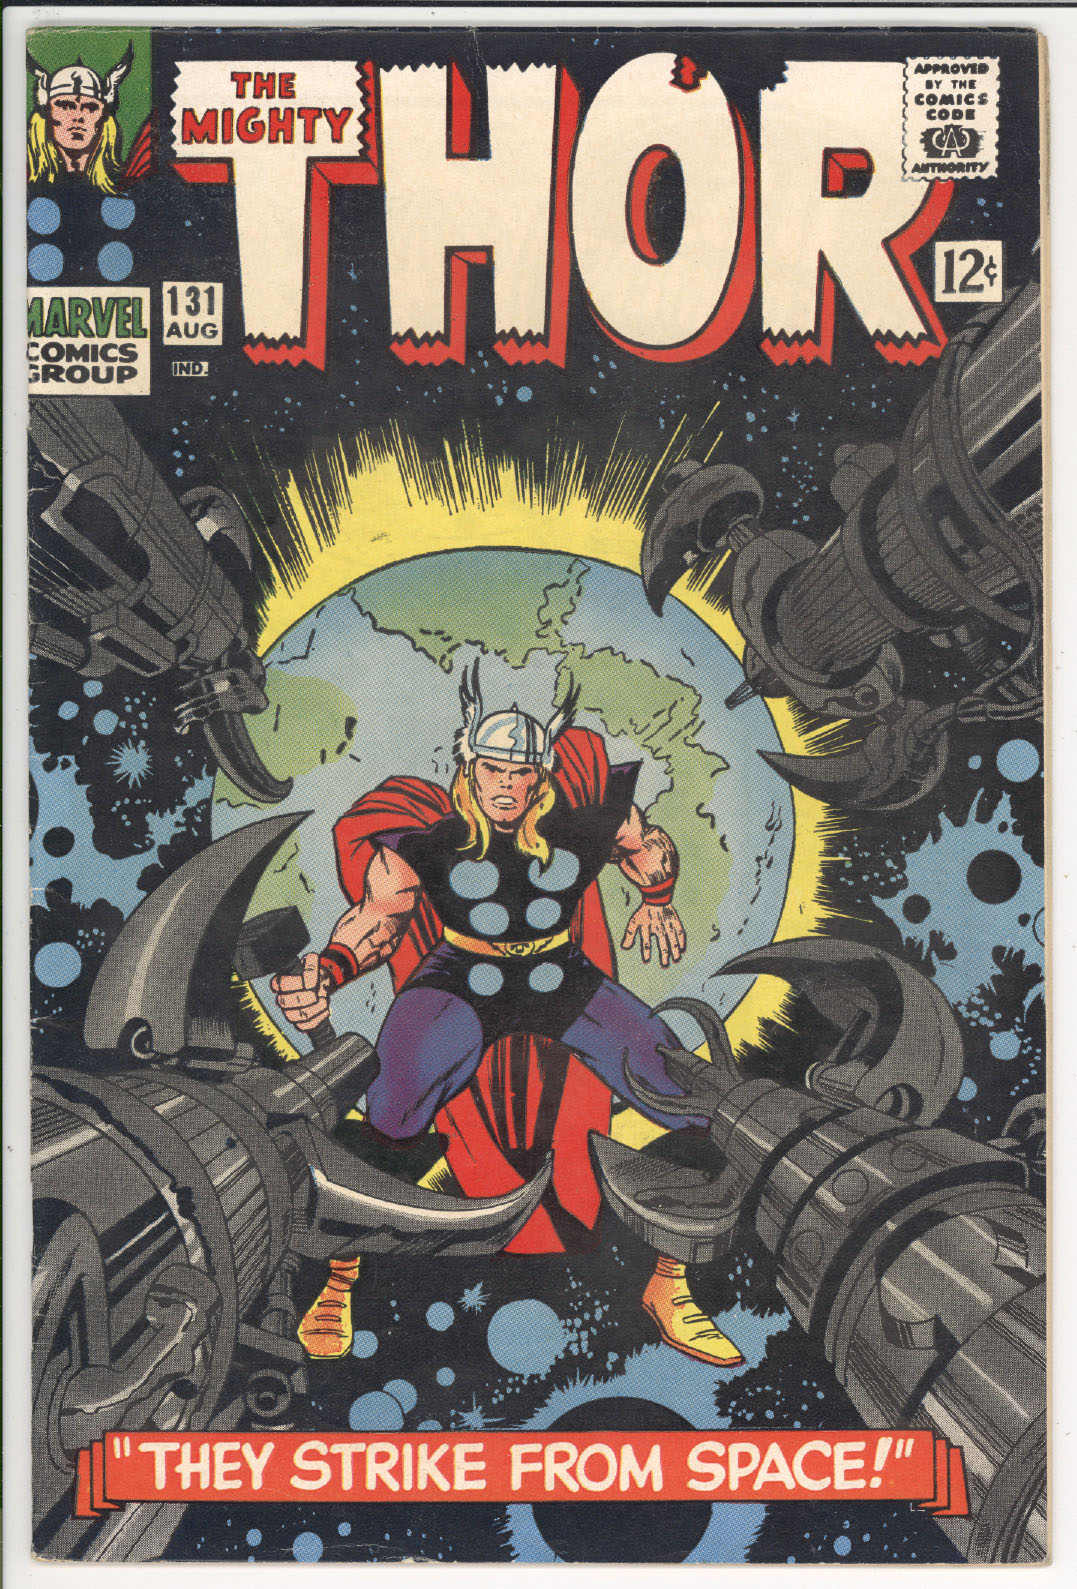 Thor #131